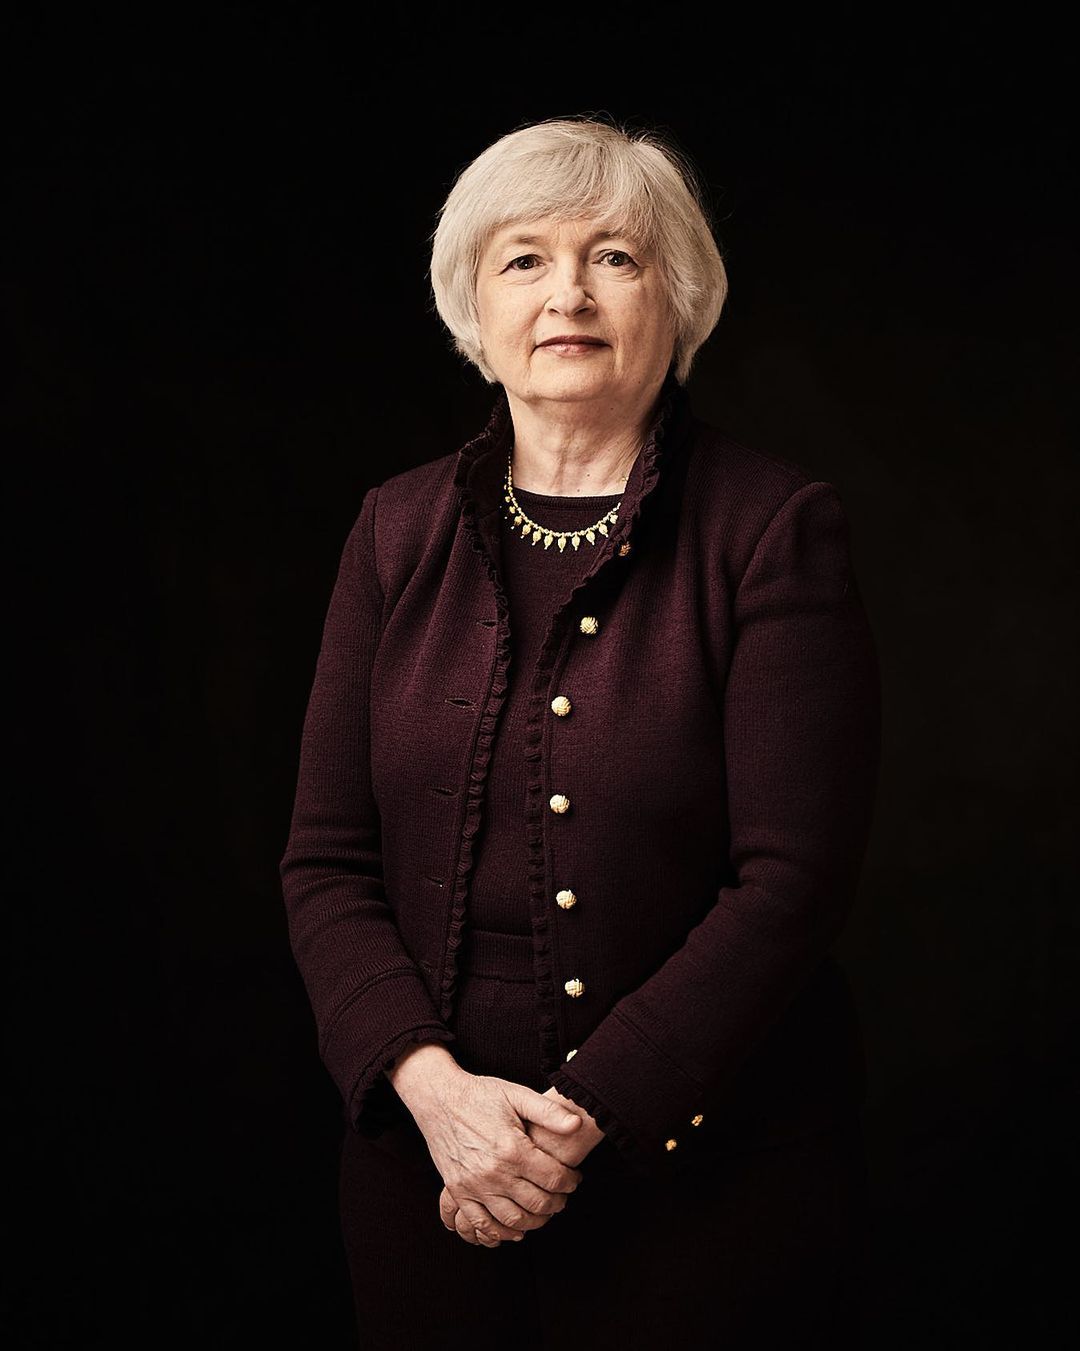 Janet Yellen official image in hd 2021